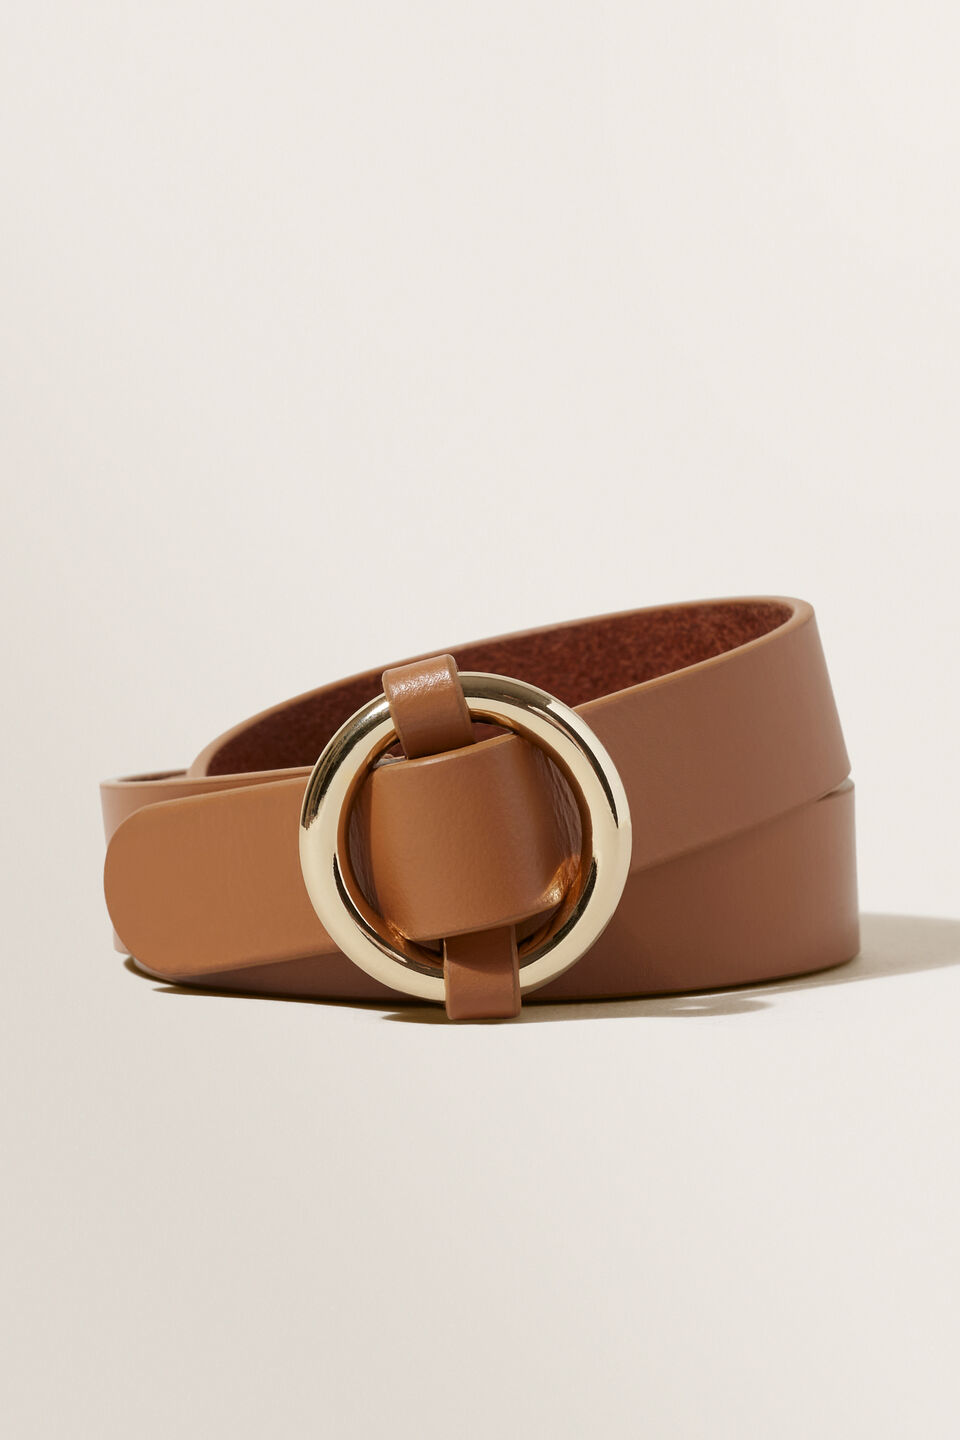 Ring Leather Belt  Tan